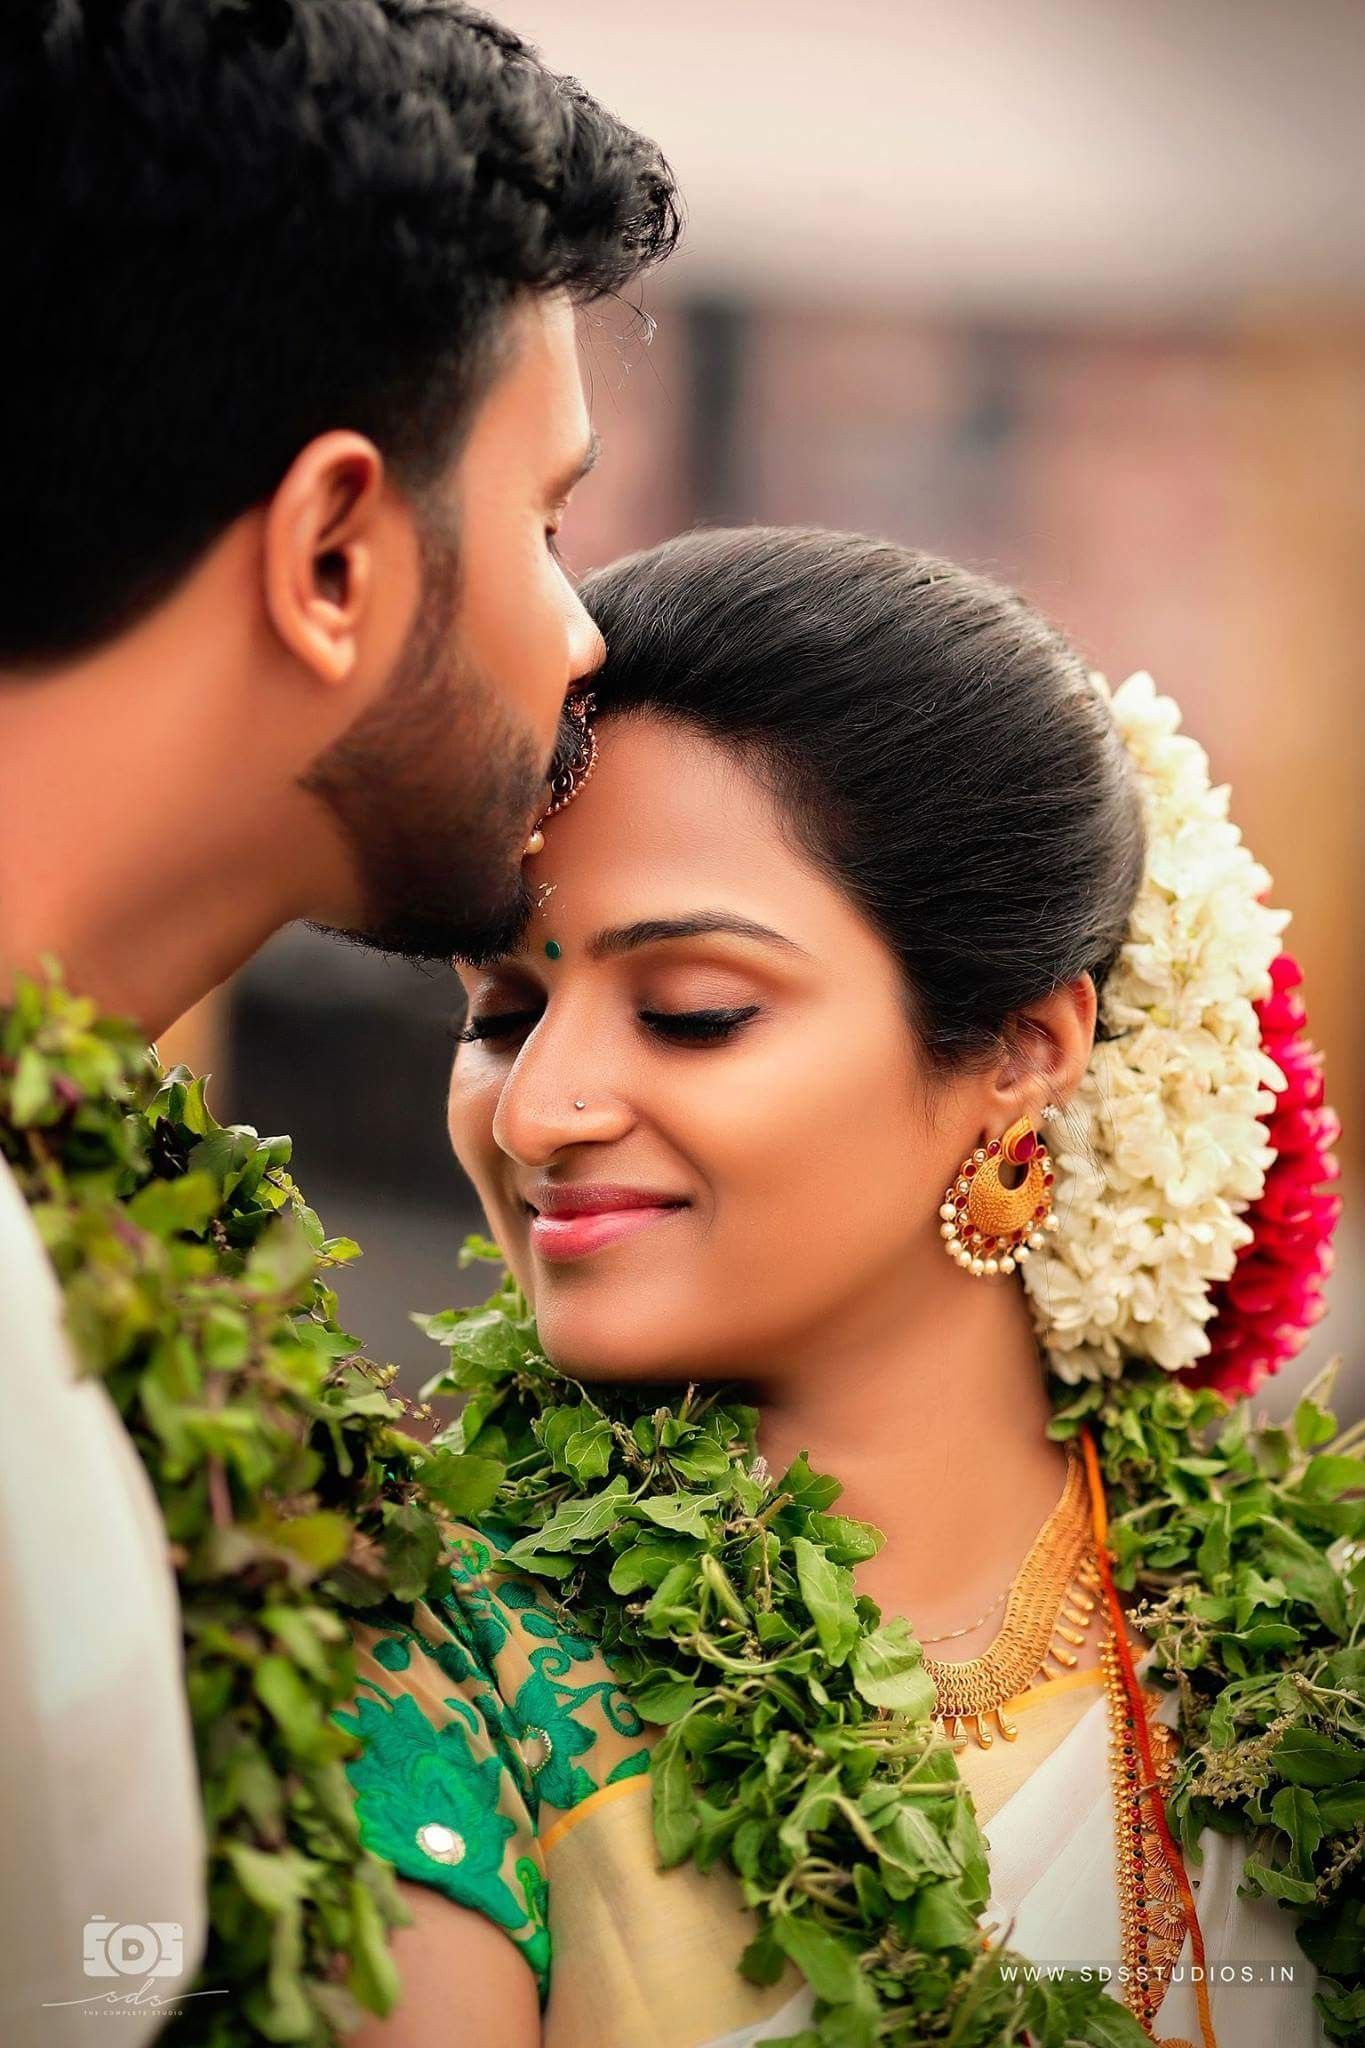 Gorgeous Kerala Couple. Indian wedding photography poses, Wedding couple poses photography, Marriage photography